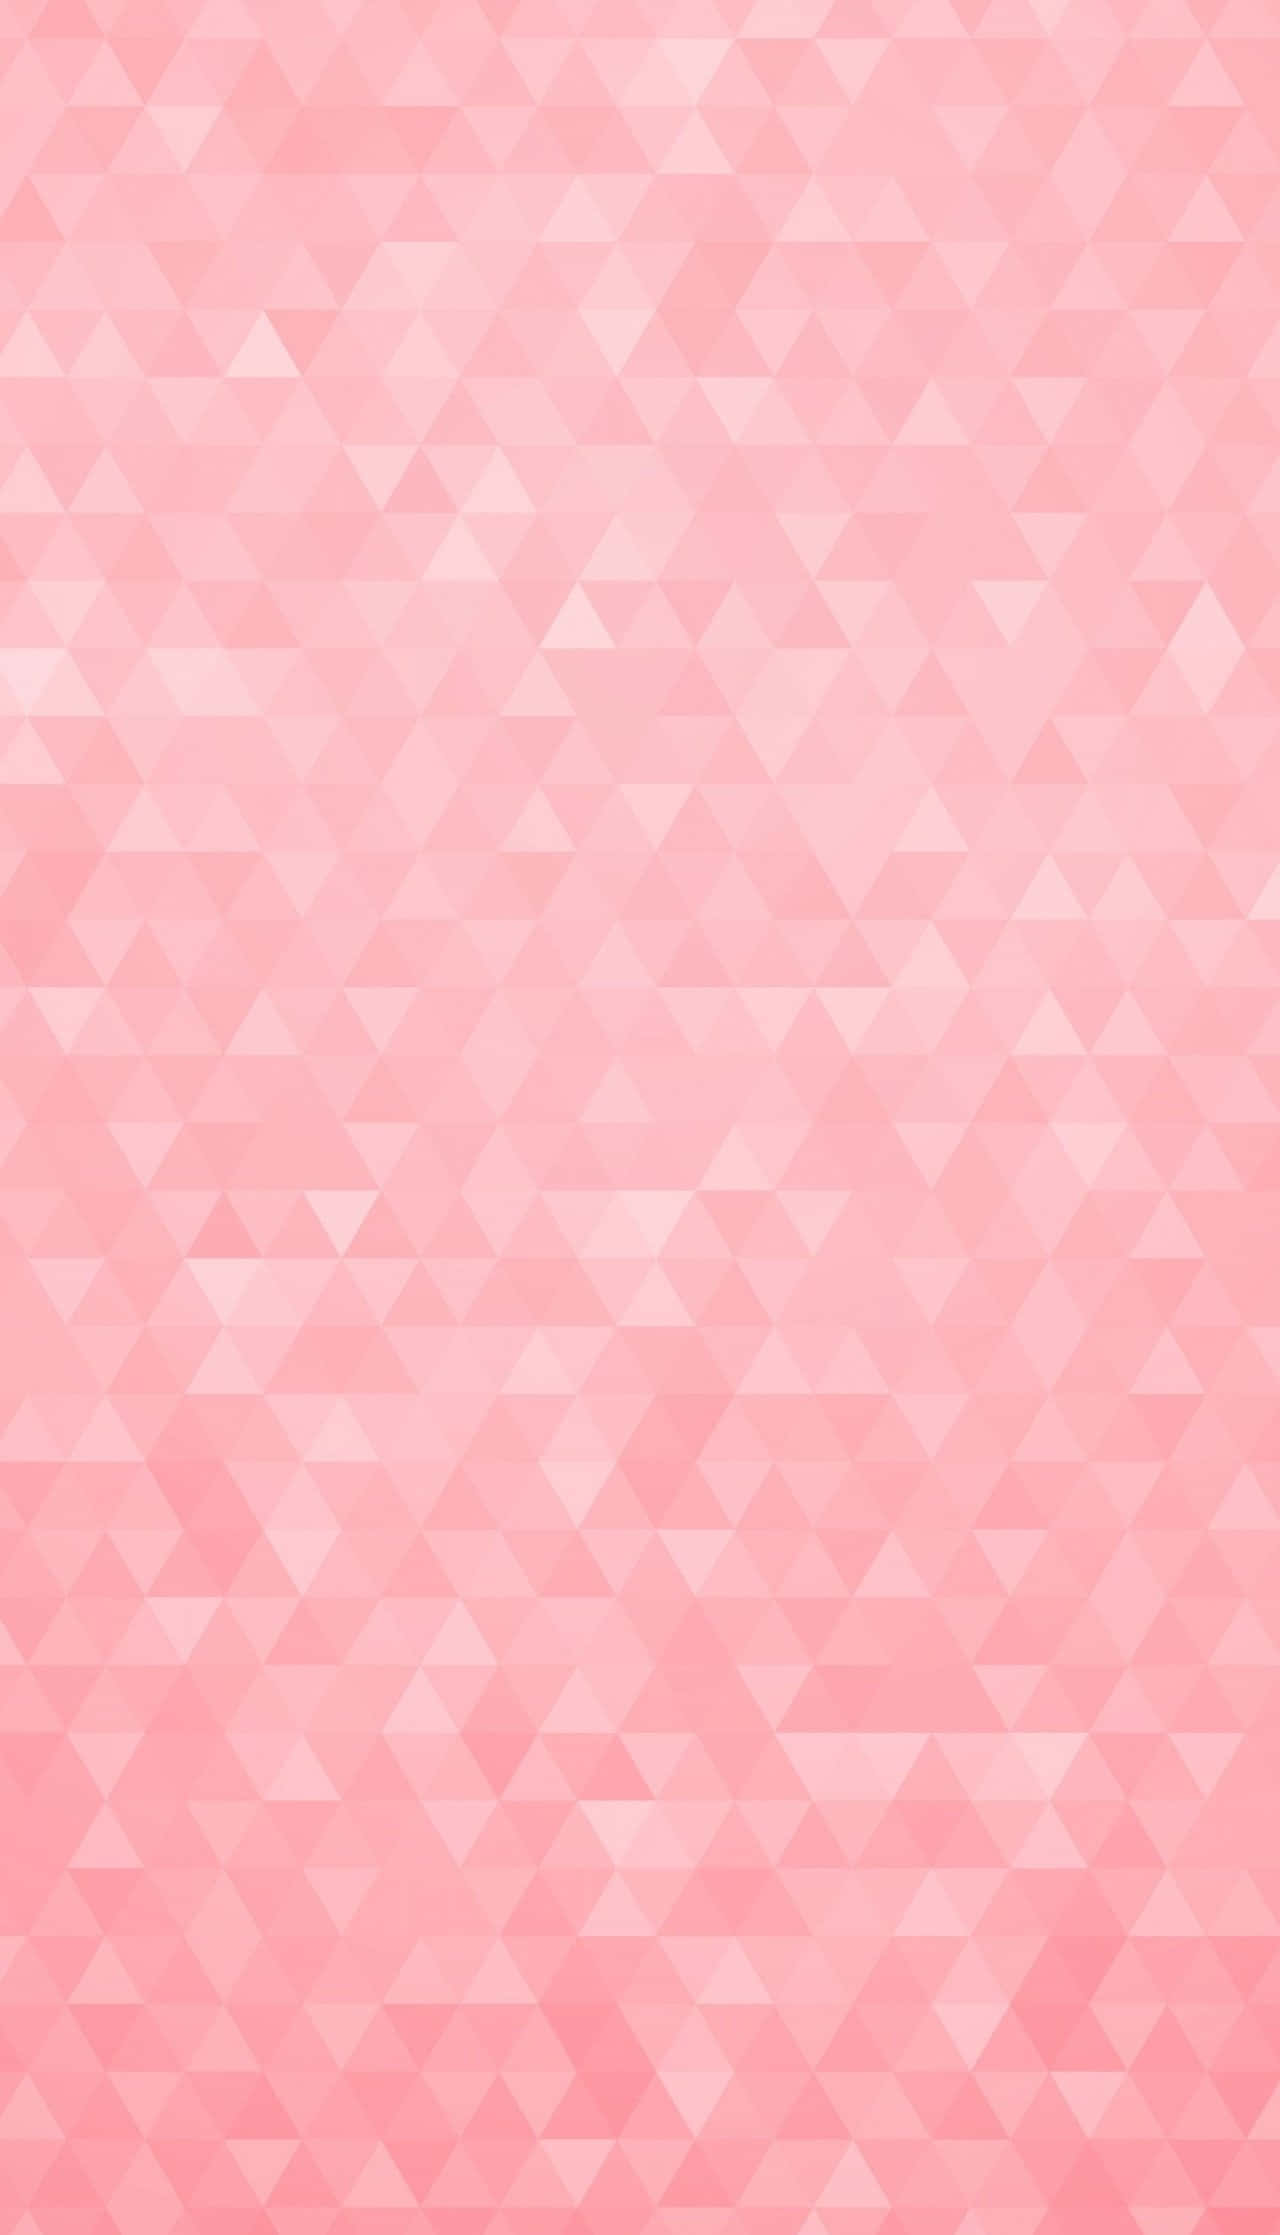 Soft, Dreamy Pink Pastel Background